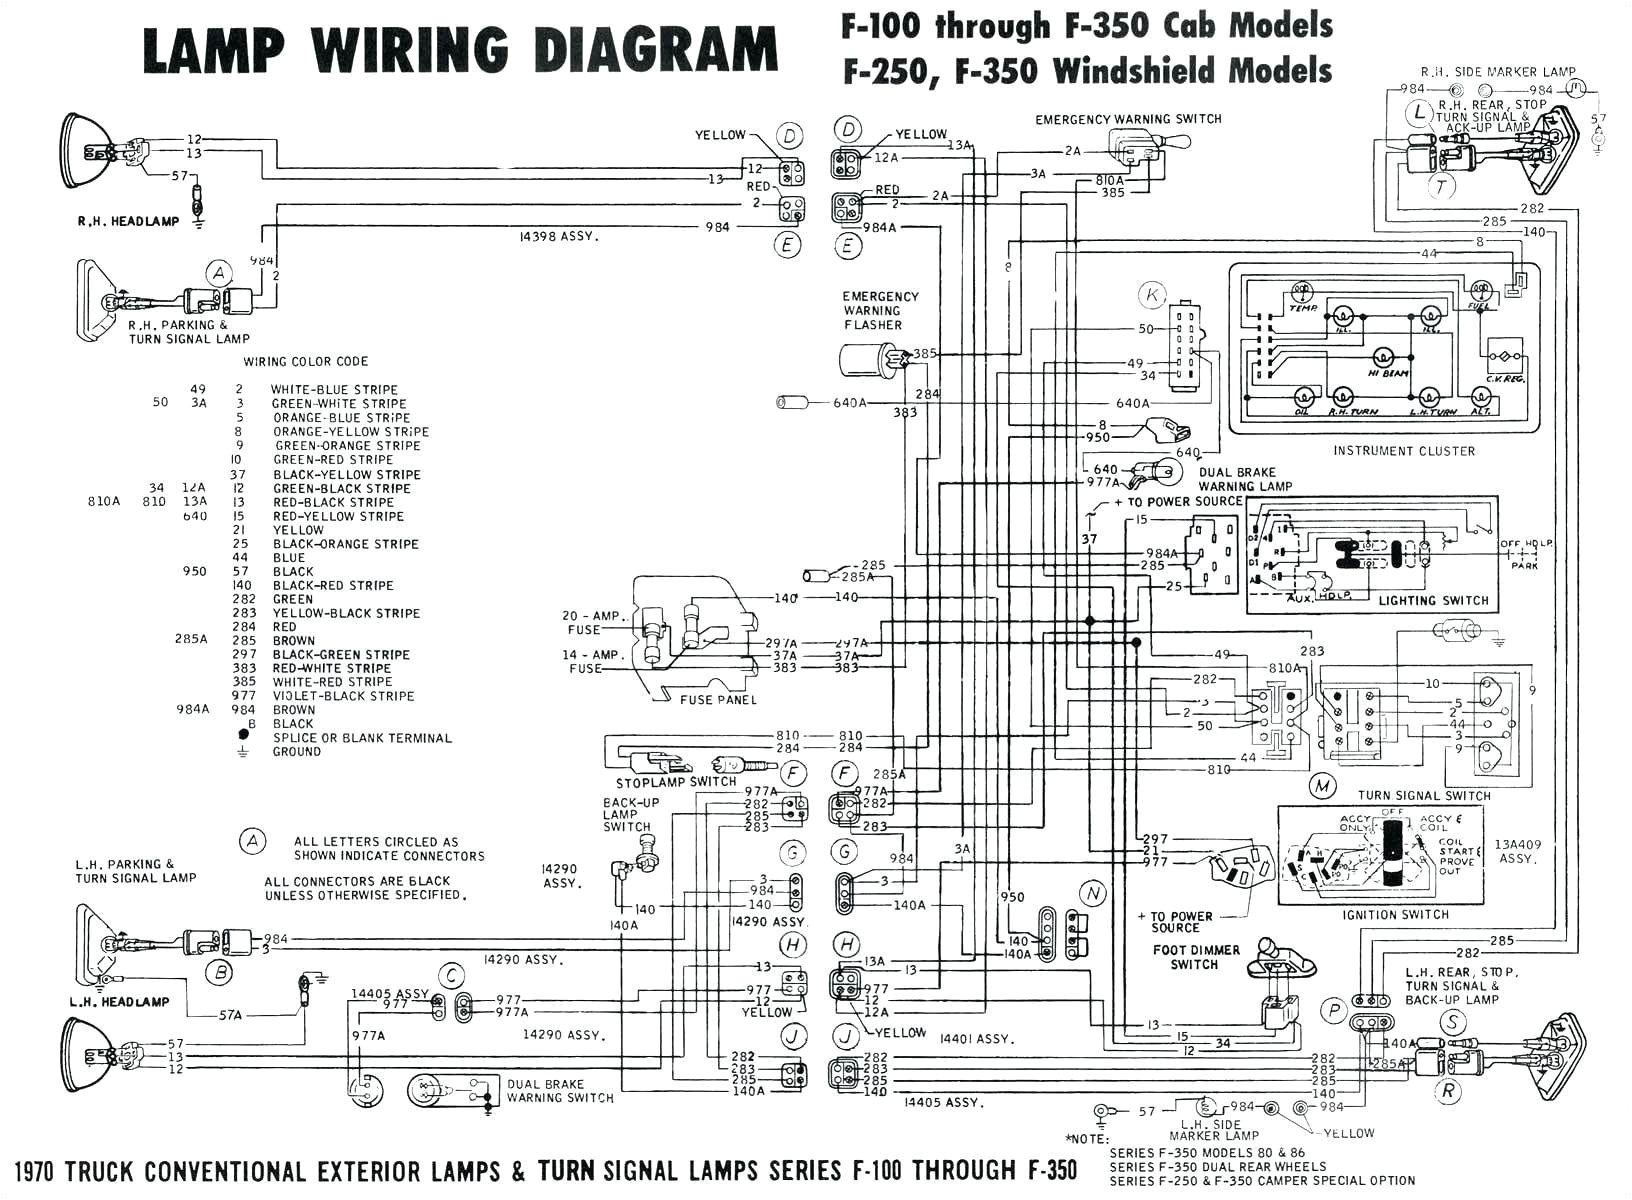 Noma thermostat Wiring Diagram Wiring Schematic for thermostat Wiring Diagram Database